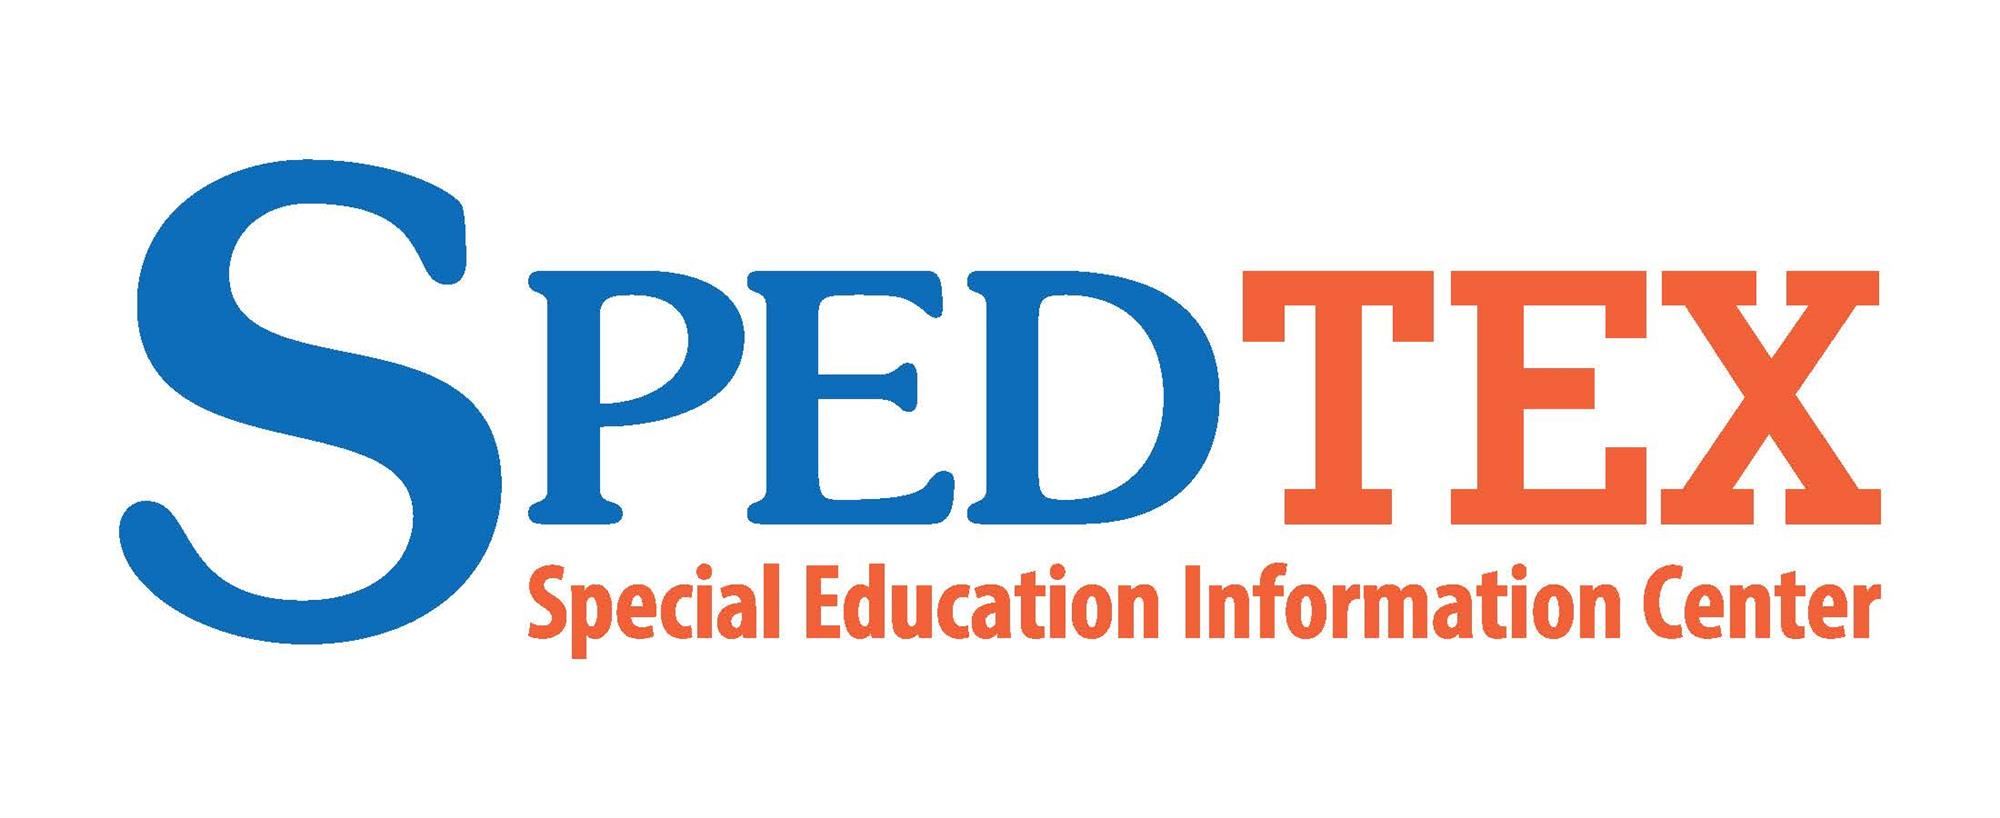 SpedTex Special Education Information Center